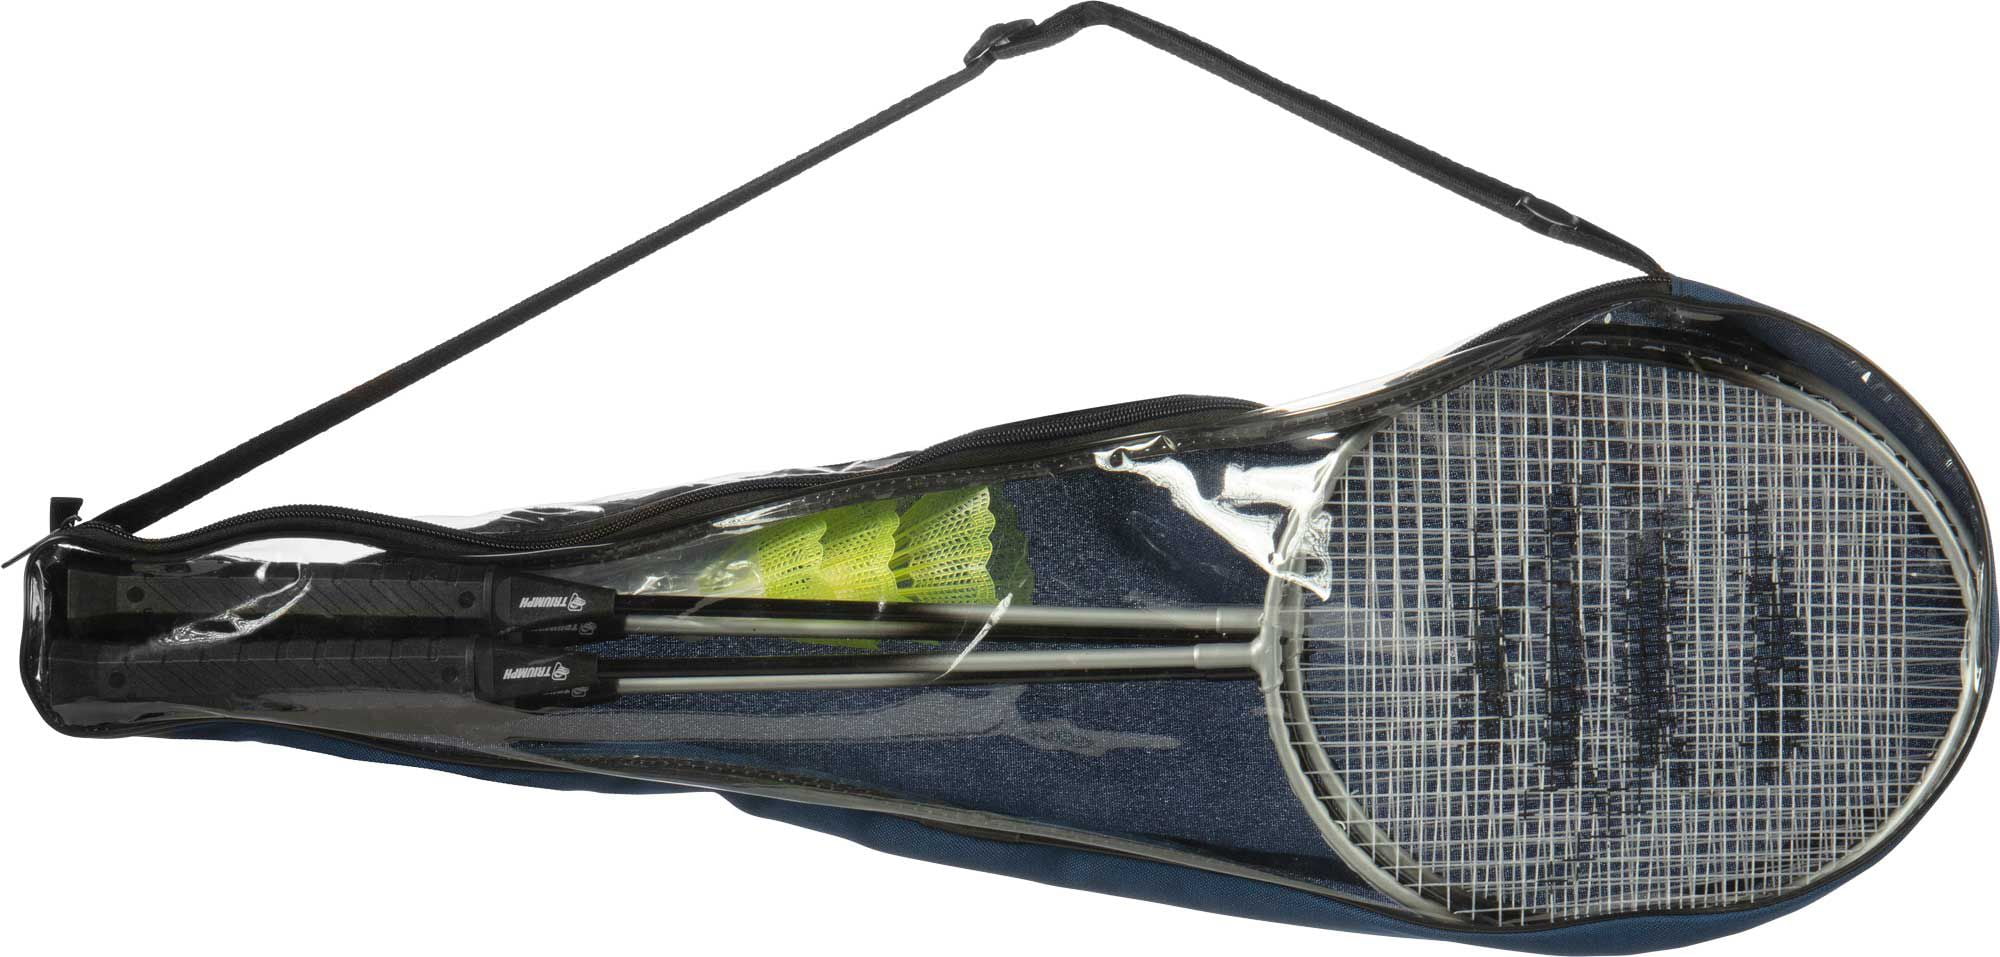 Outdoor Sport Sports Pro Twin Metal Badminton Set Model 